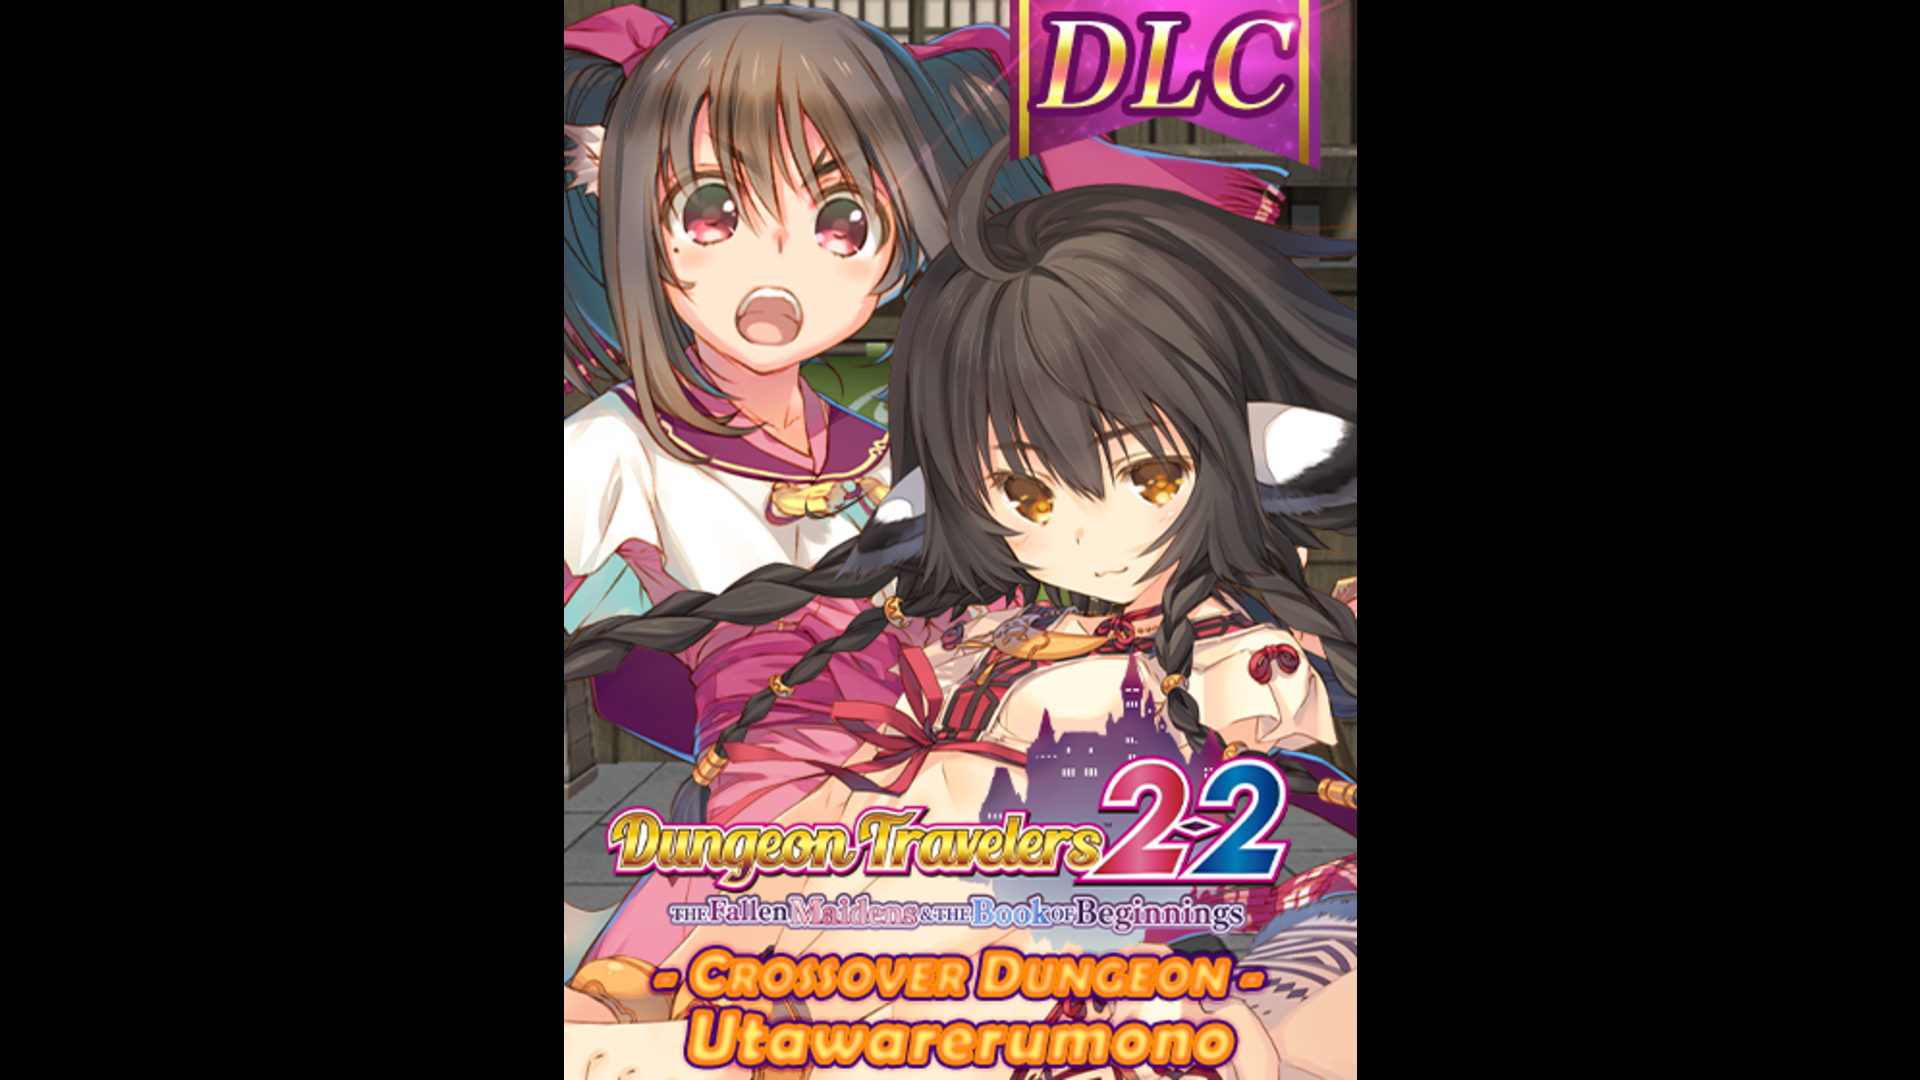 DLC - Dungeon: Imperial Capital ft. Utawarerumono (Dungeon Travelers 2-2) - RPG - 1